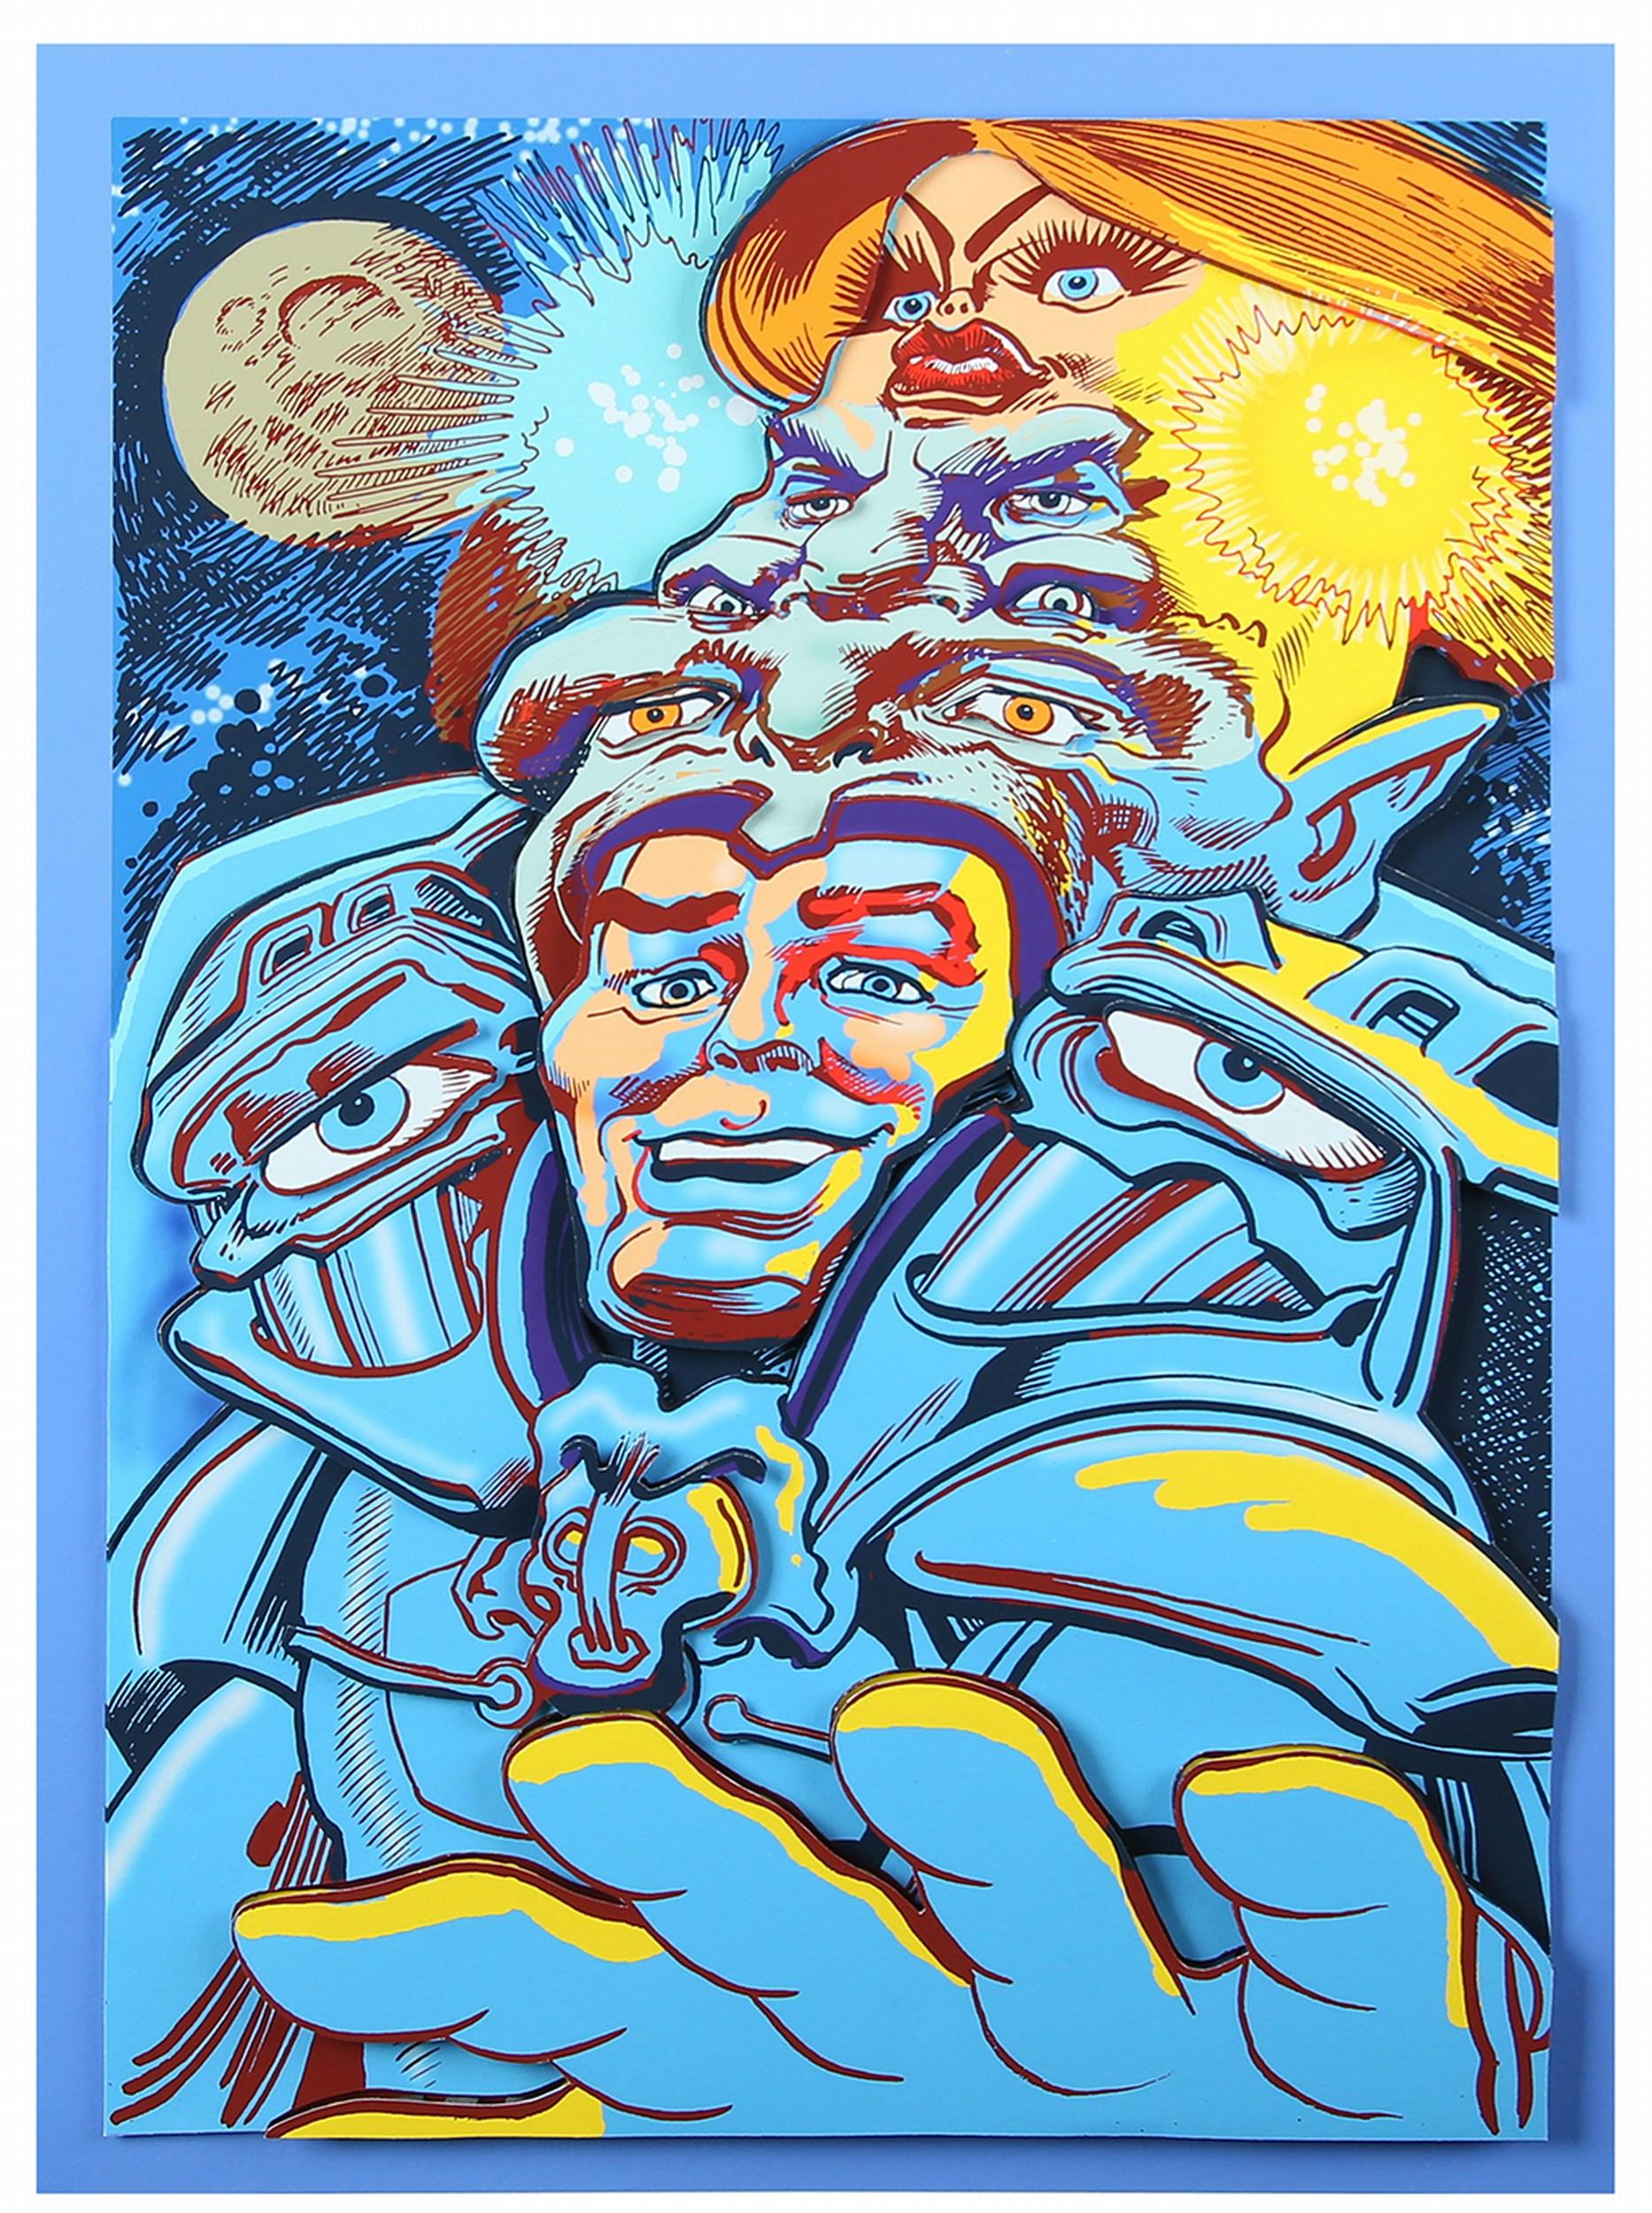 Spacegod (Pop Art, Street Art, Comic, James Rizzi) - Print by Michael Wittmann